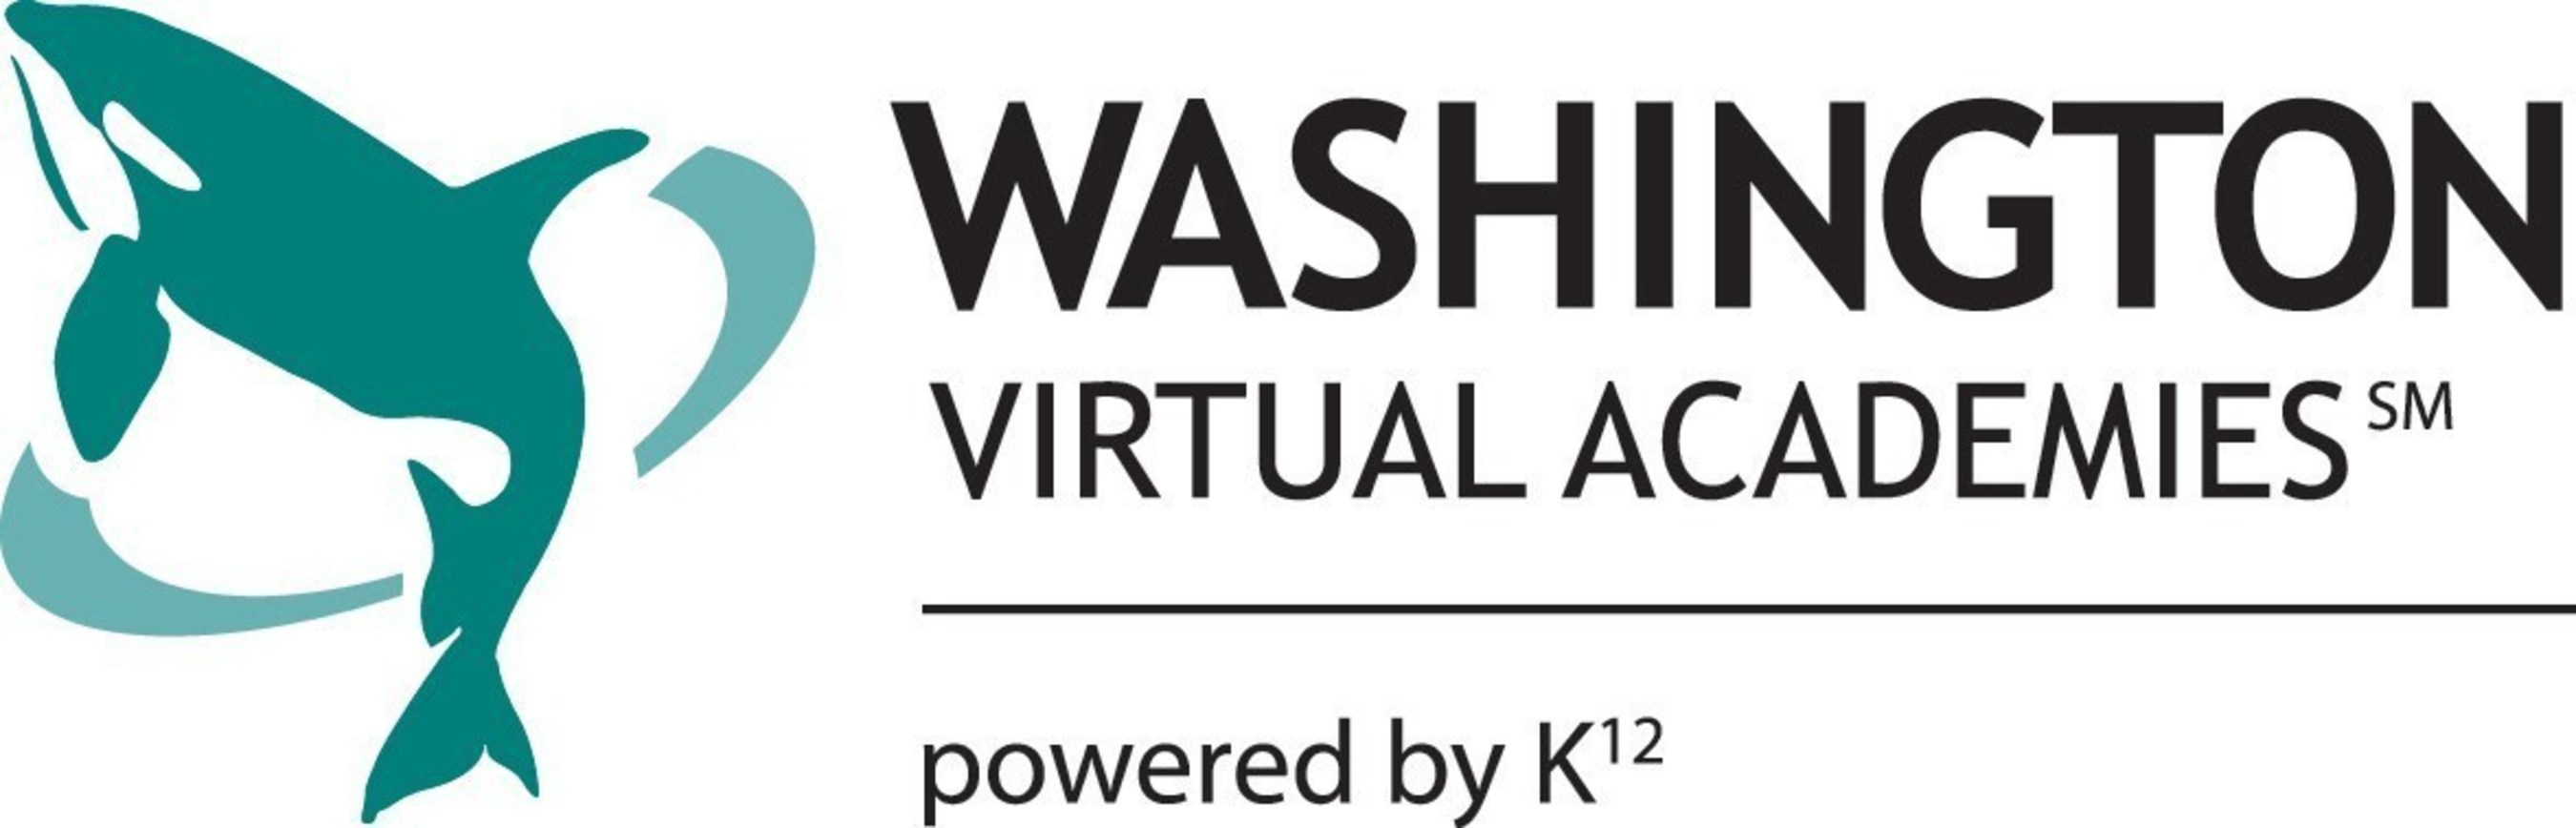 Washington Virtual Academies